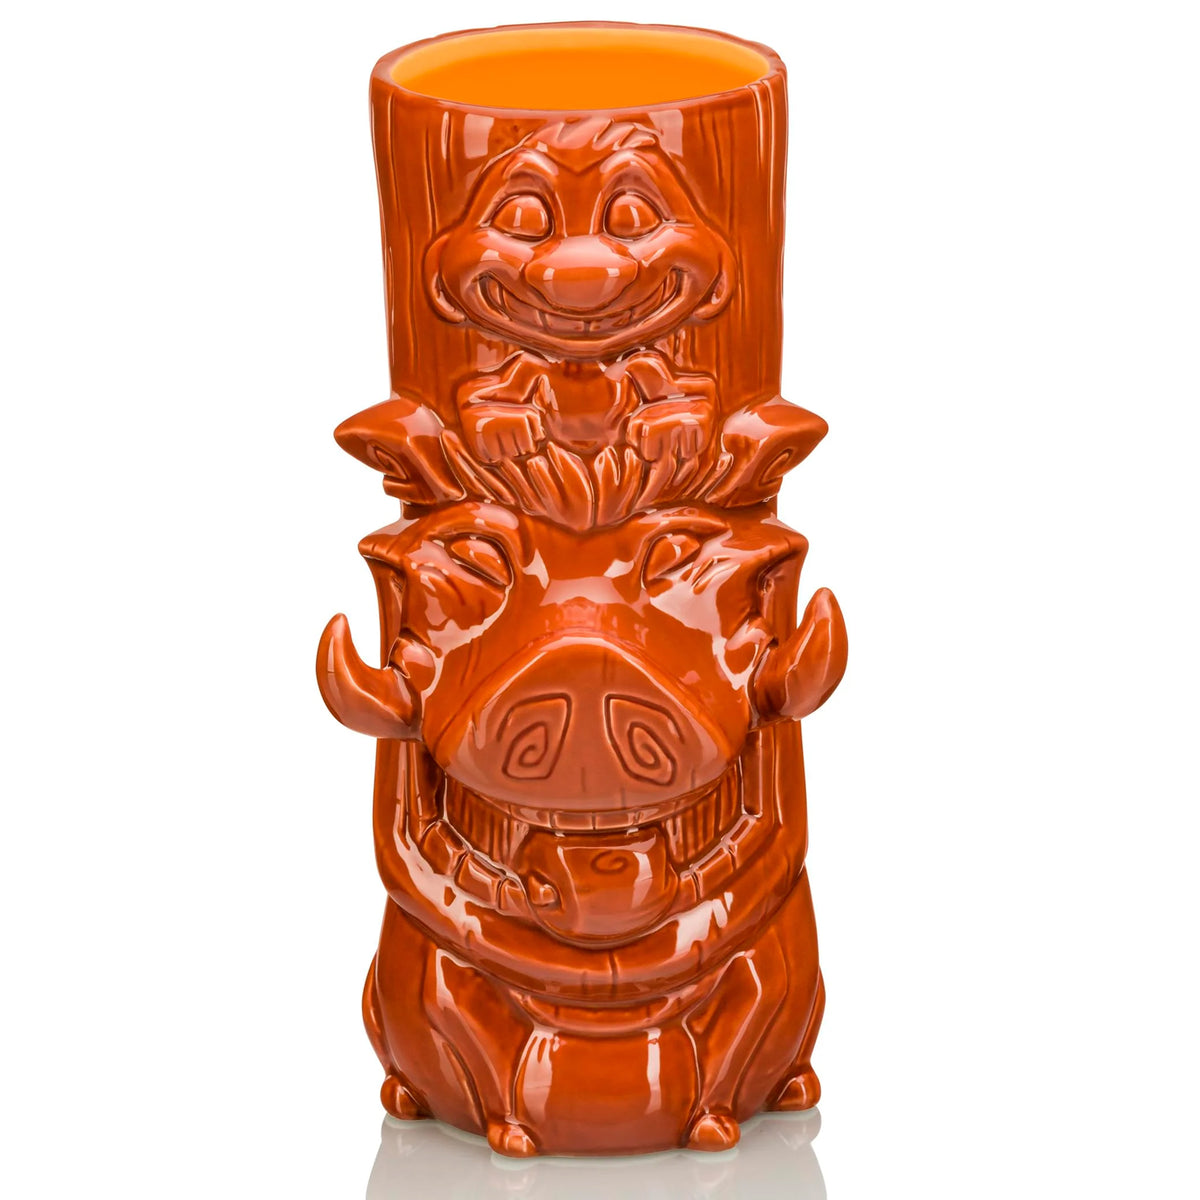 Disney Lion King Timon and Pumbaa 28oz Ceramic Sculpted Tiki Mug